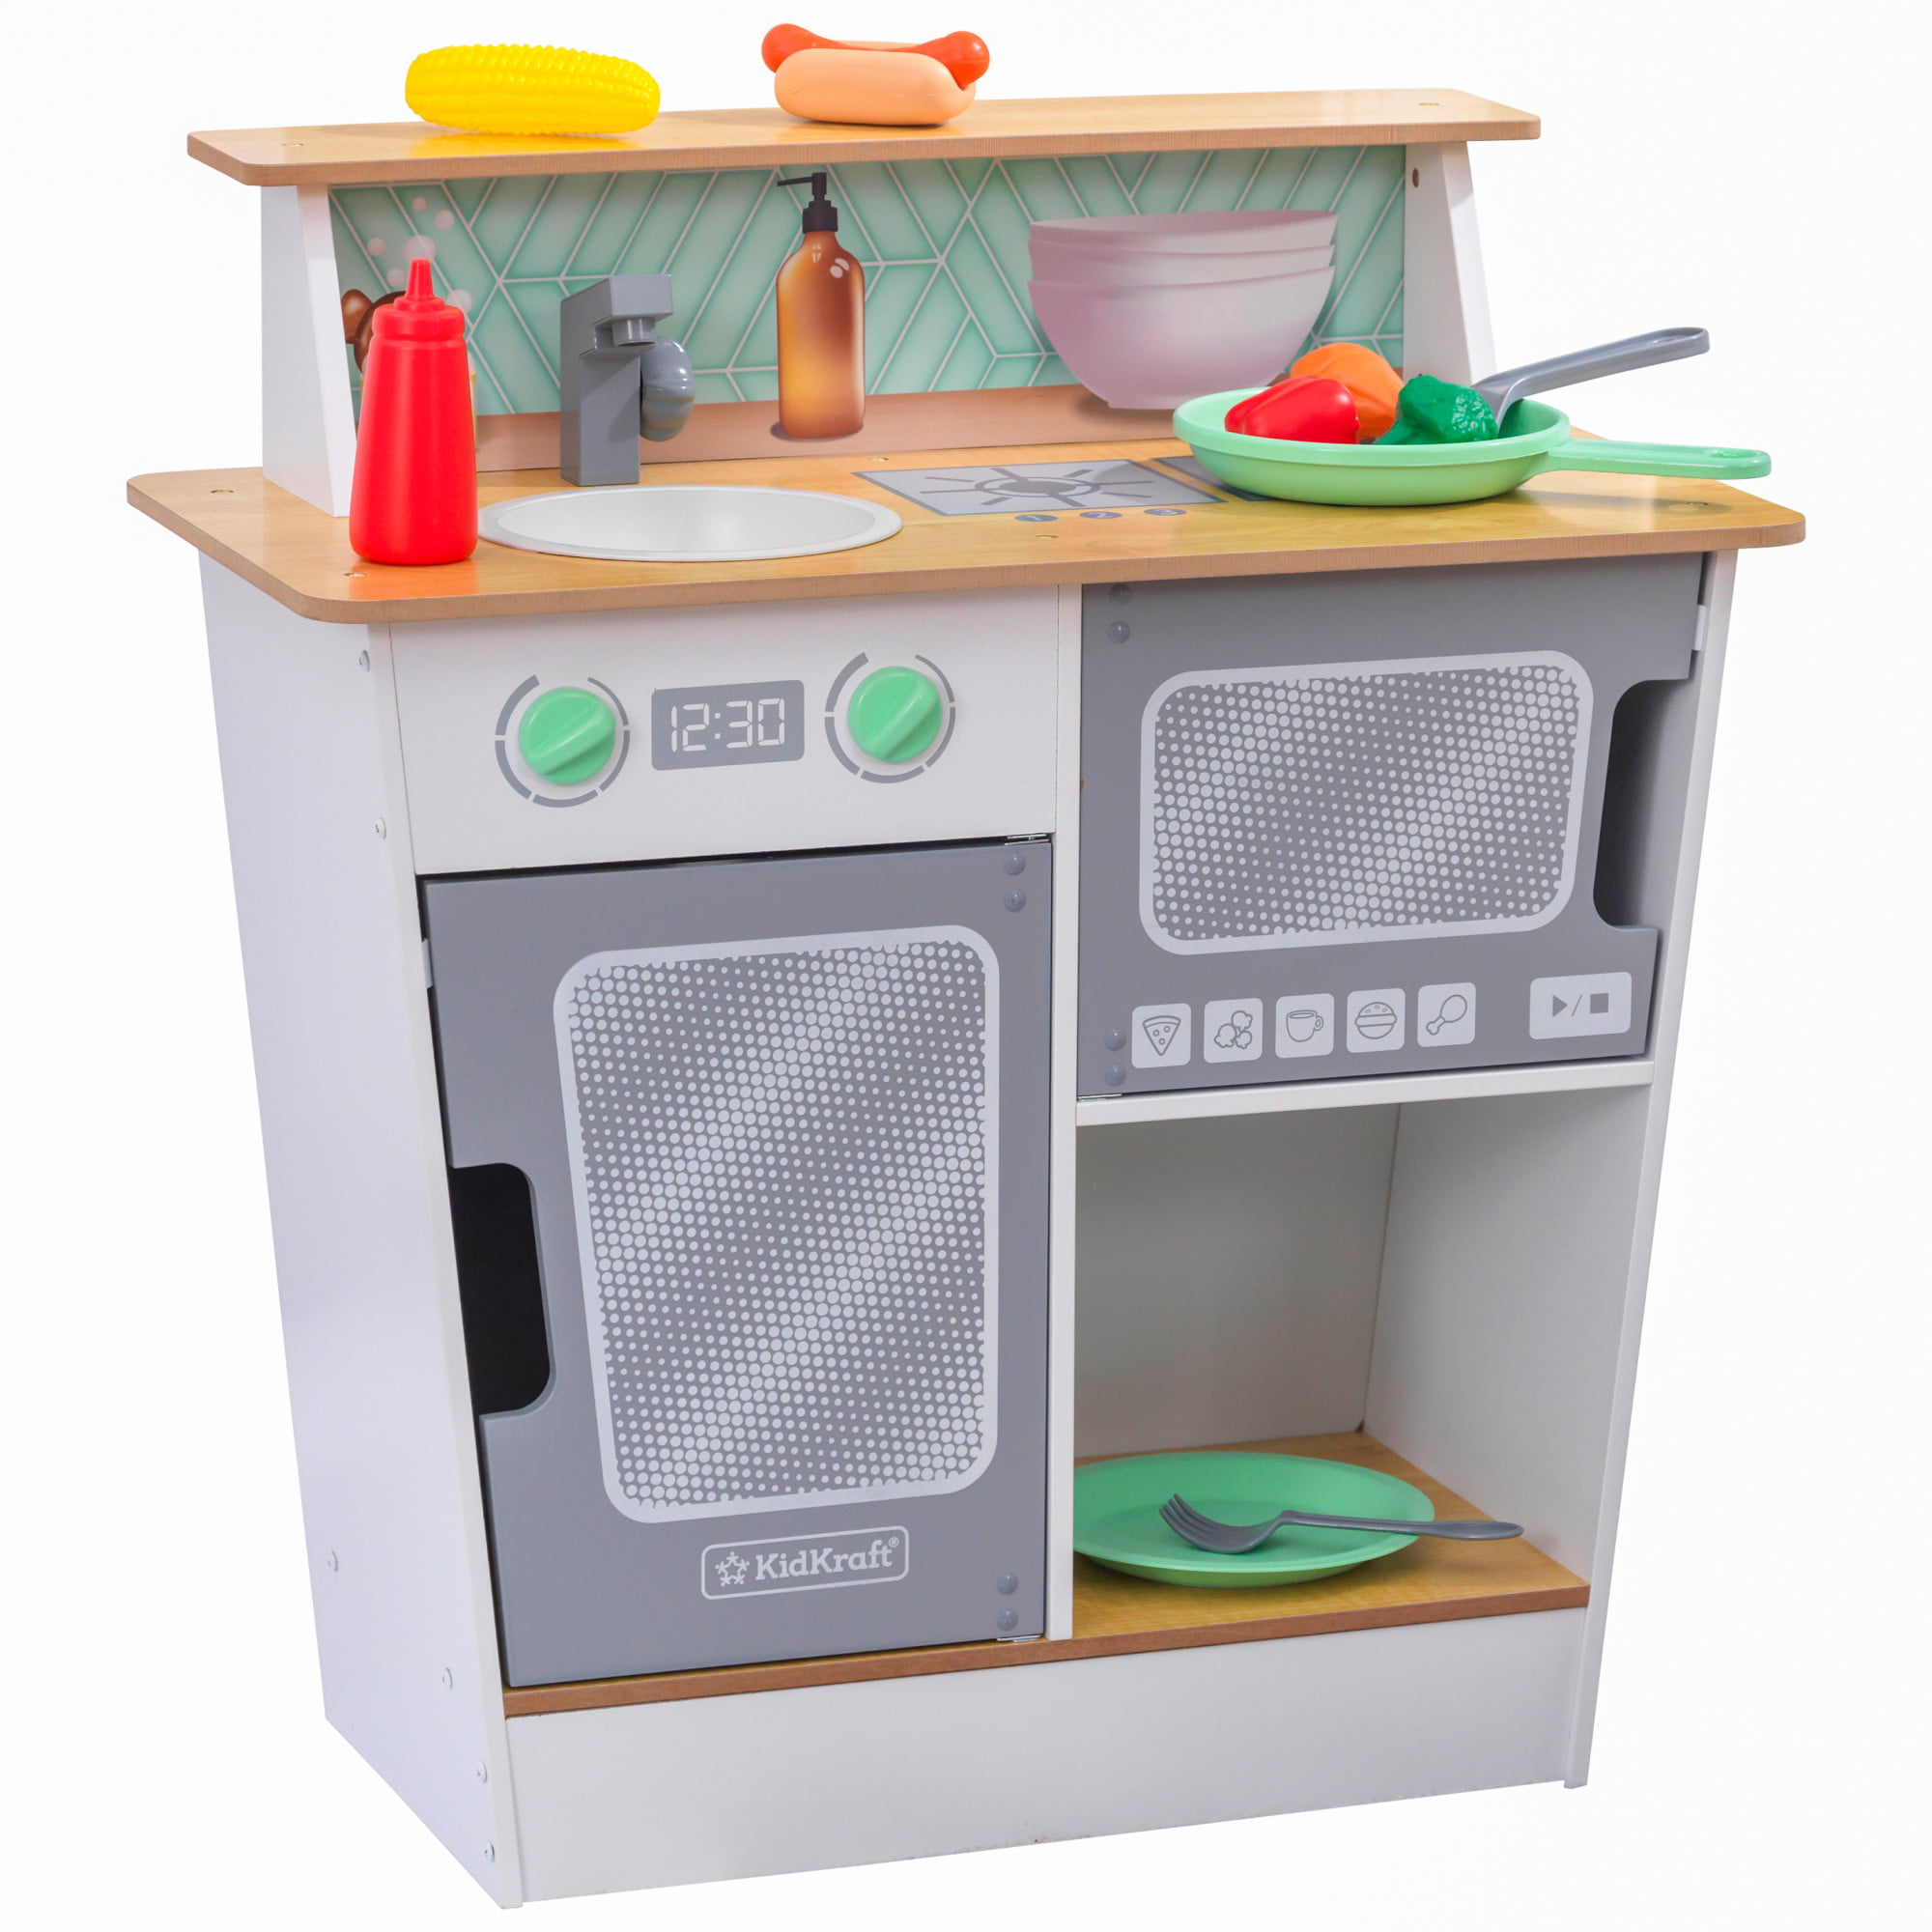 KidKraft 10 Piece Serve-in-Style Wooden Play Kitchen, Multi-color -  Walmart.com